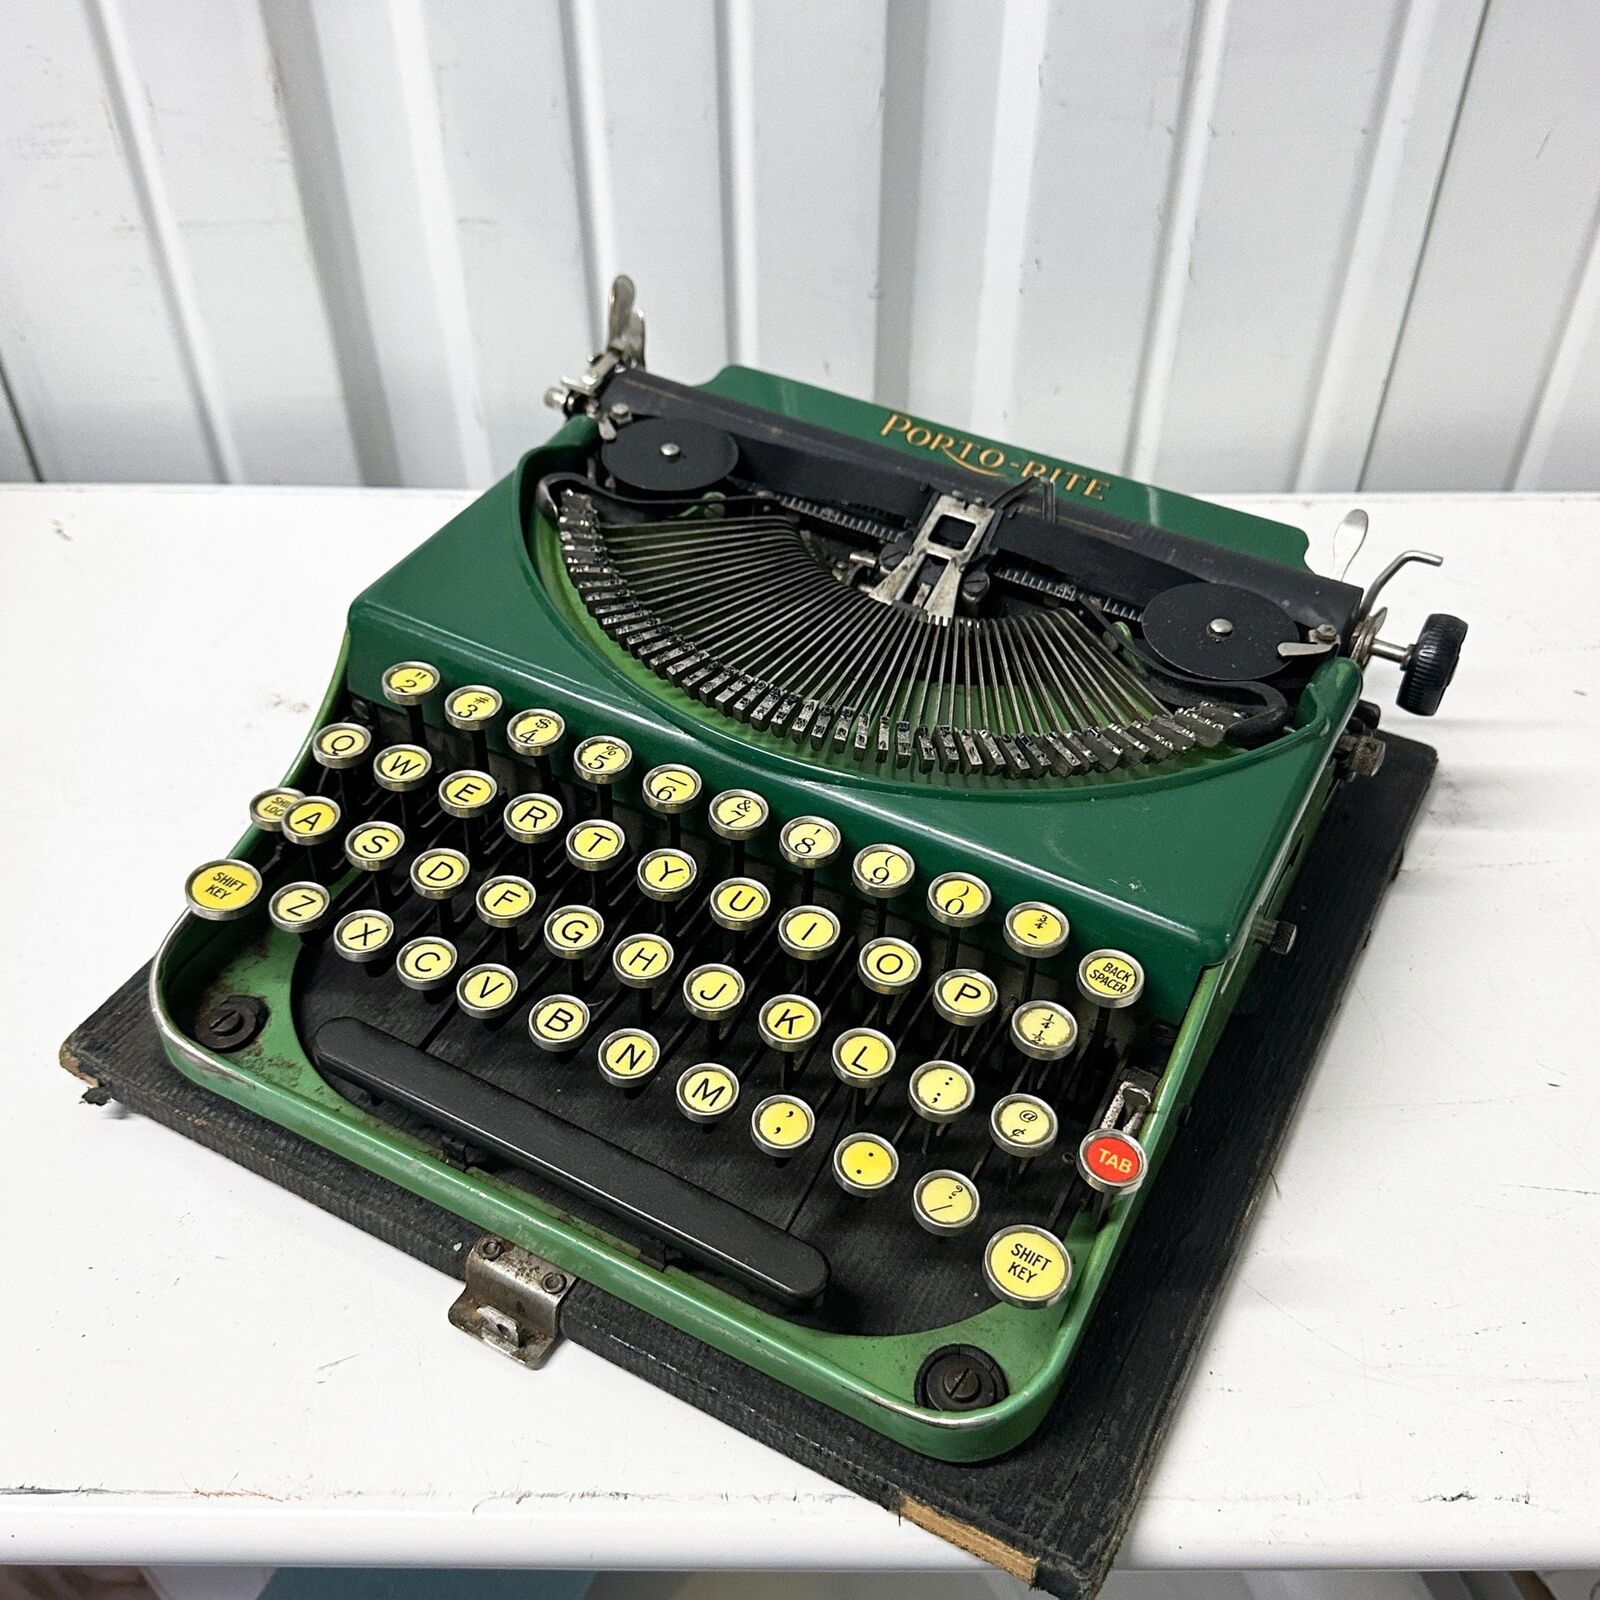 Super Rare 1920s Remington Porto-Rite (Duotone Green) Portable Manual Typewriter